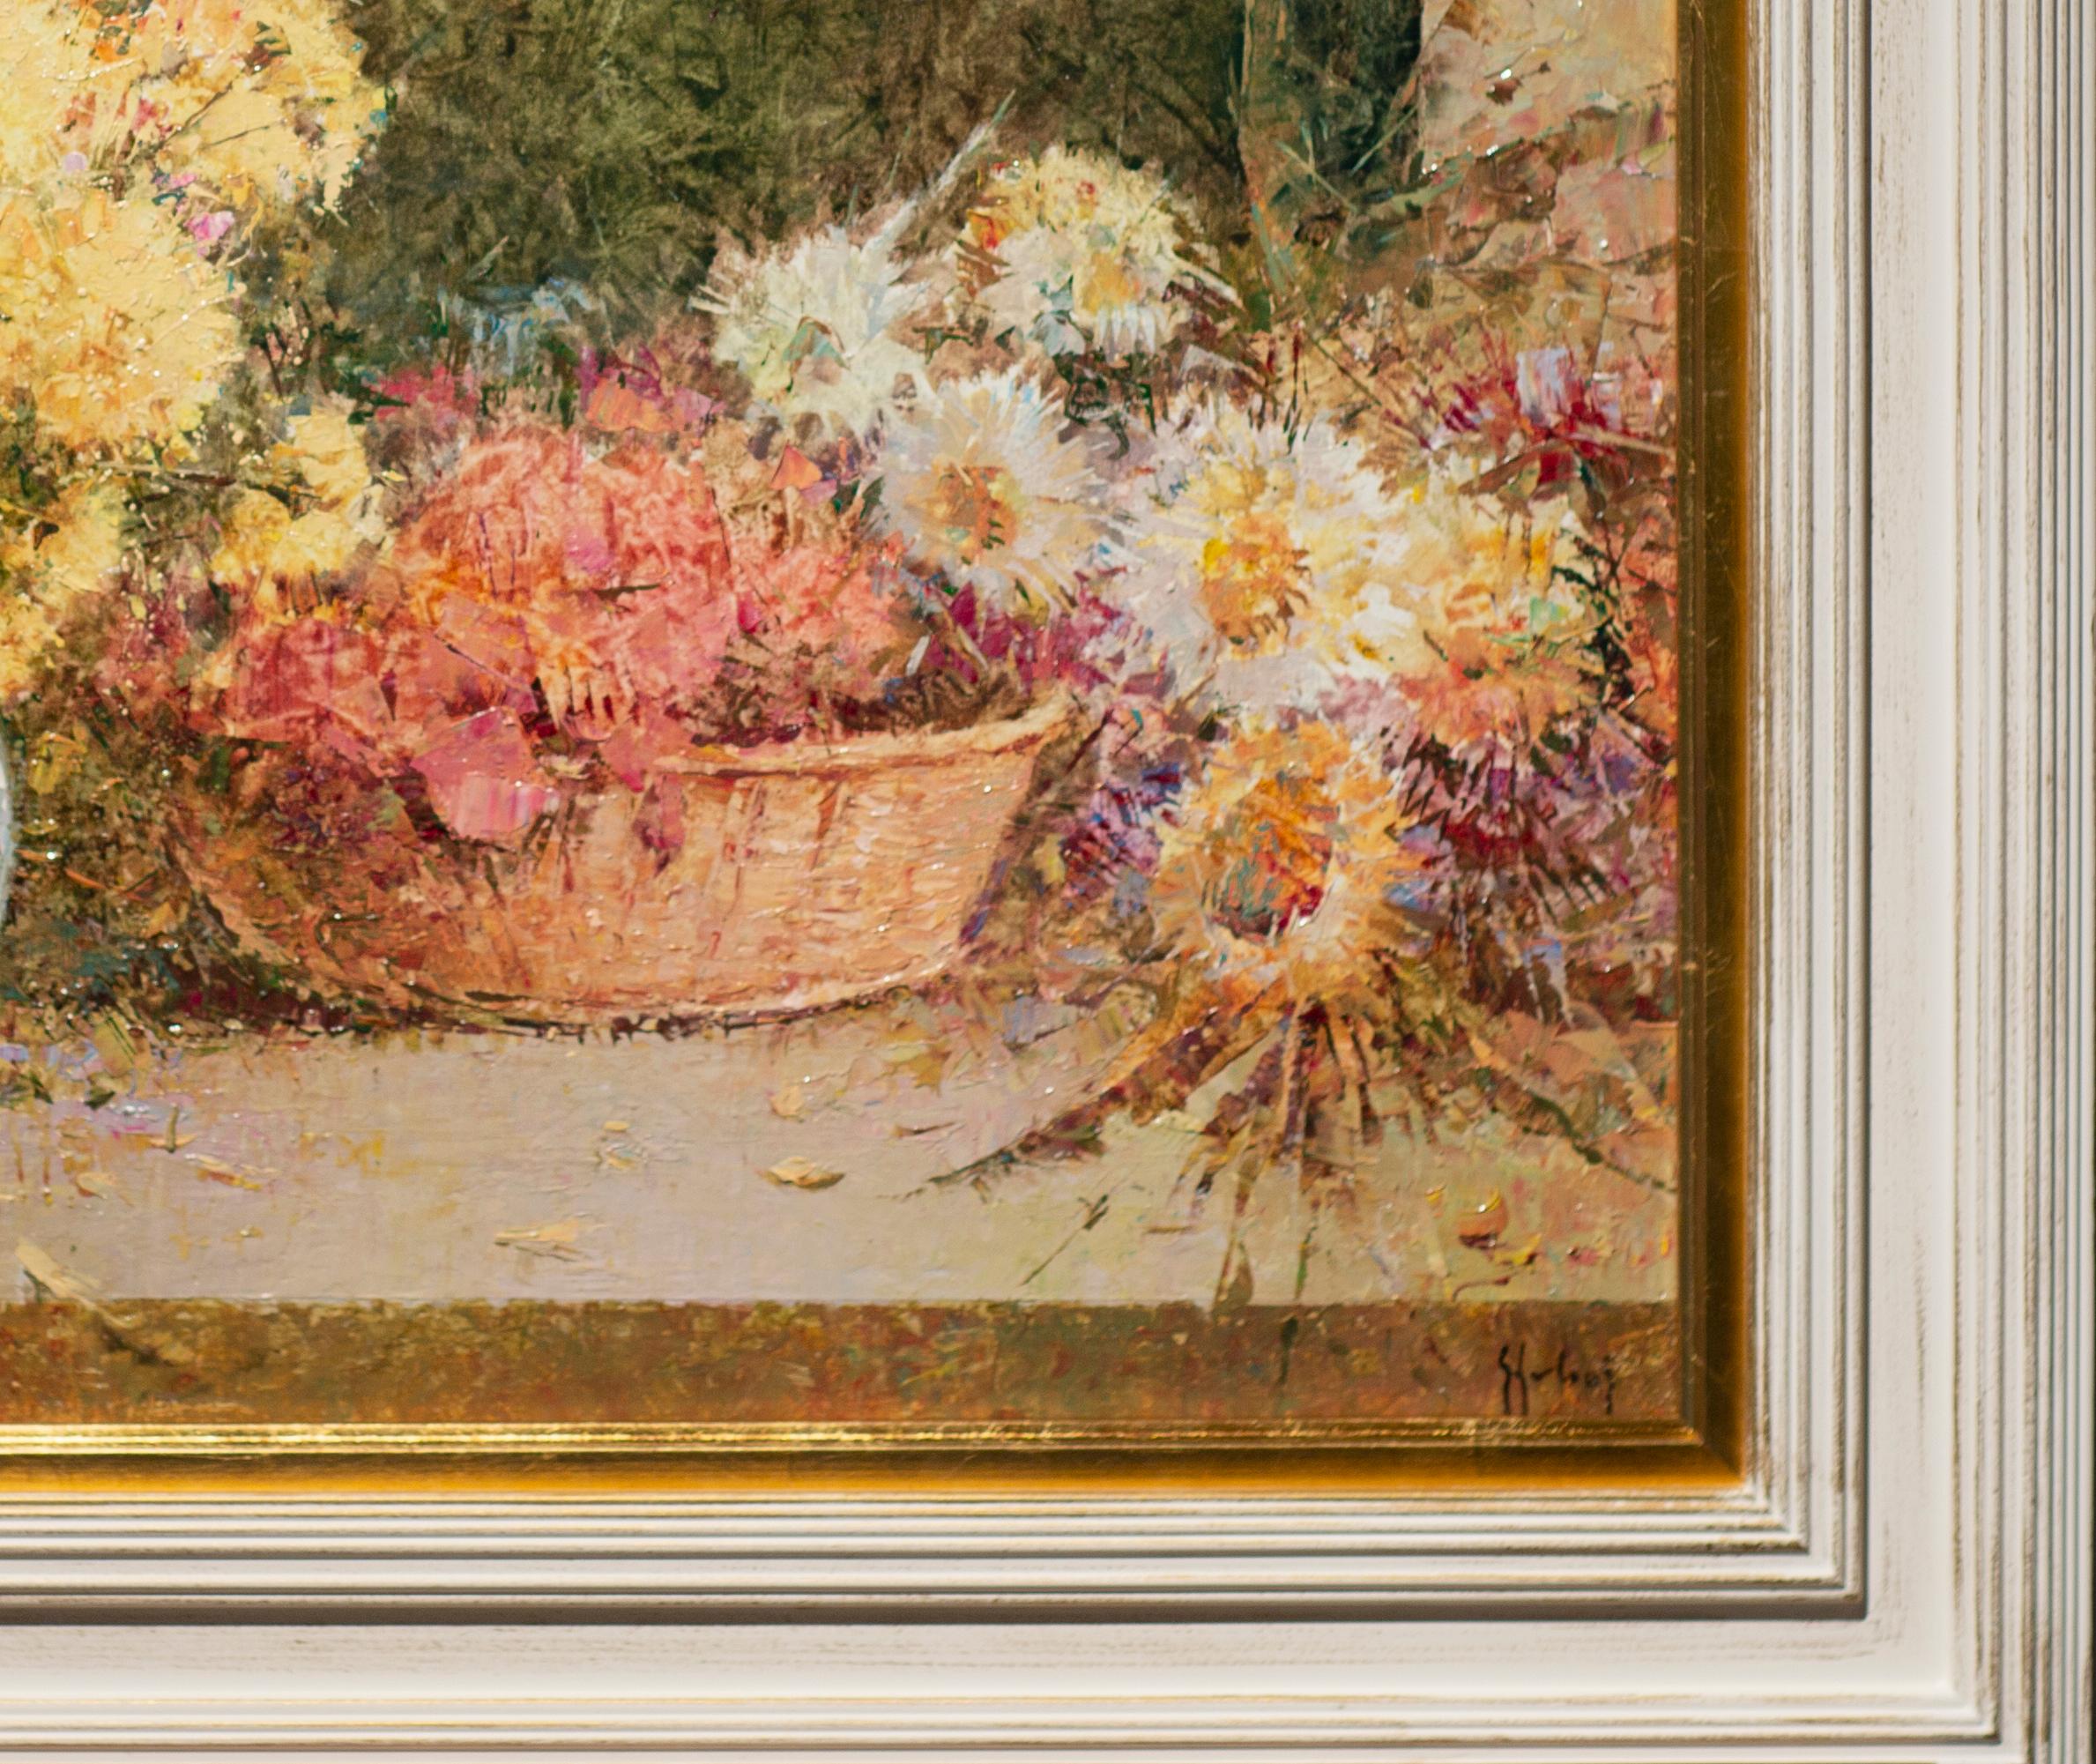 Nature morte contemporaine 'Collecting the Wildflowers', jaune, rose - Impressionnisme Painting par Helios Gisbert